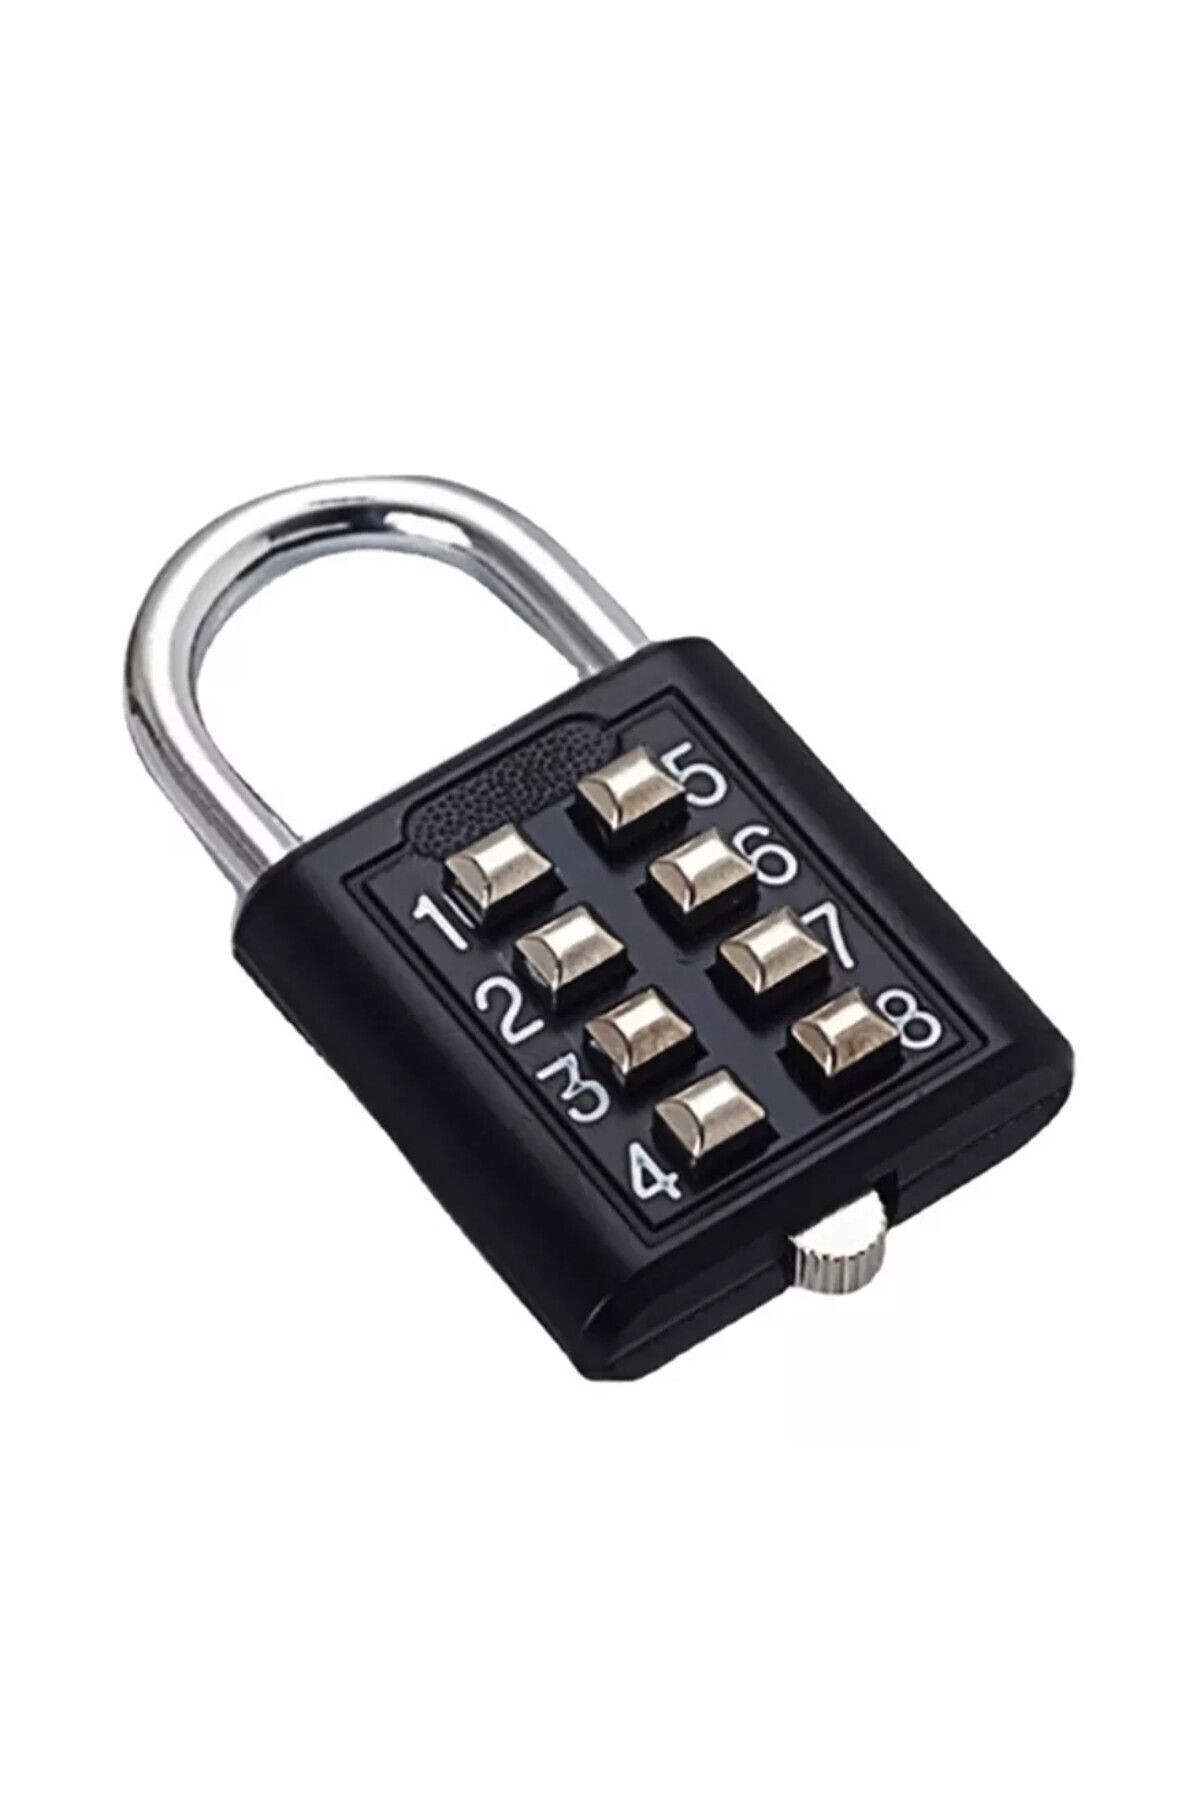 Xolo 8 Şifreli Akıllı Kilit Basmalı Şifreli Kilit Ofis Dolap Bagaj Valiz Çanta Güvenlik Kilit XLK412